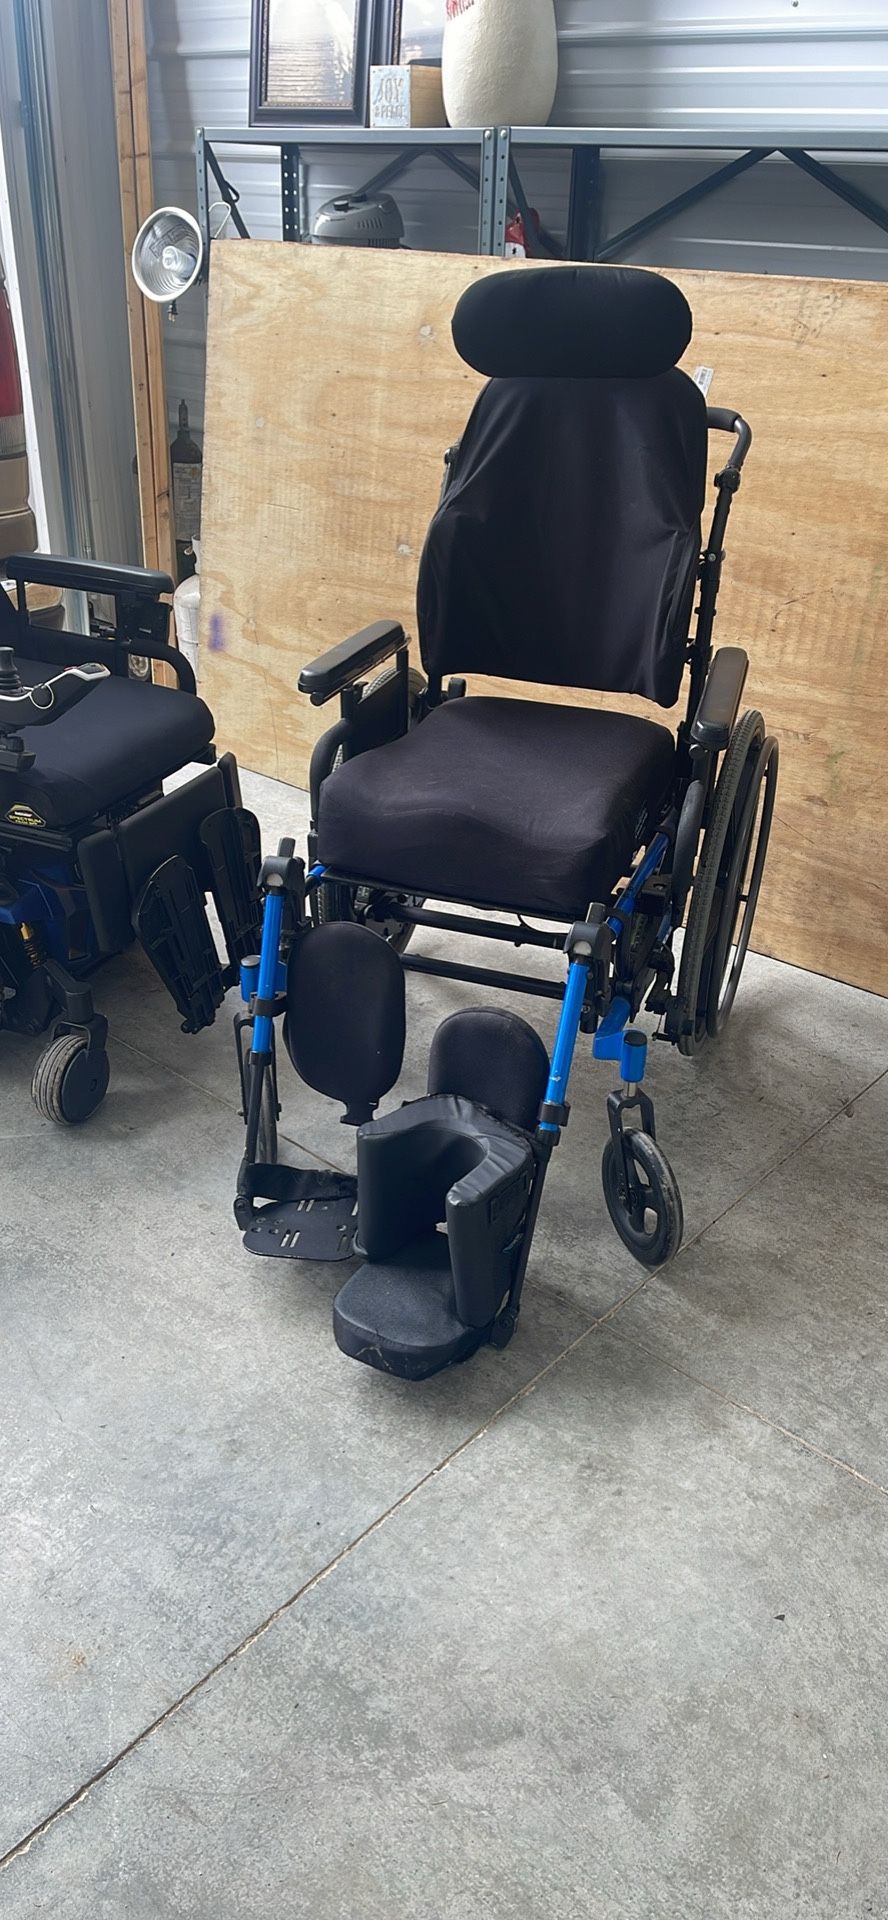 Wheelchair Quickie Iris